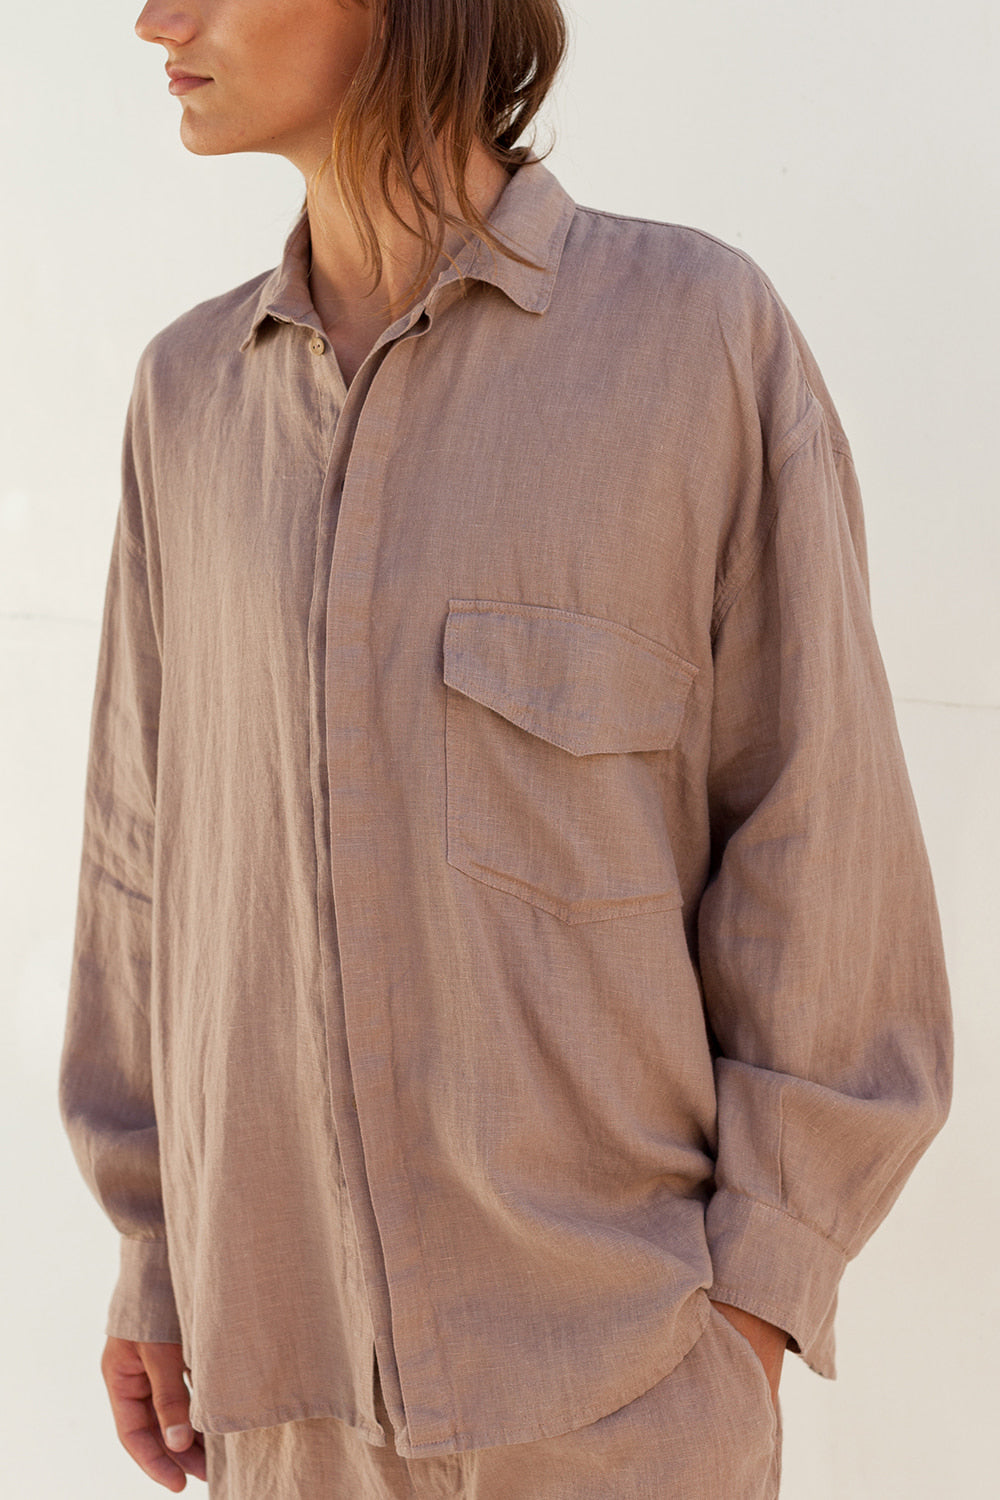 FREESIA men's oversized linen shirt | Manufacture de Lin